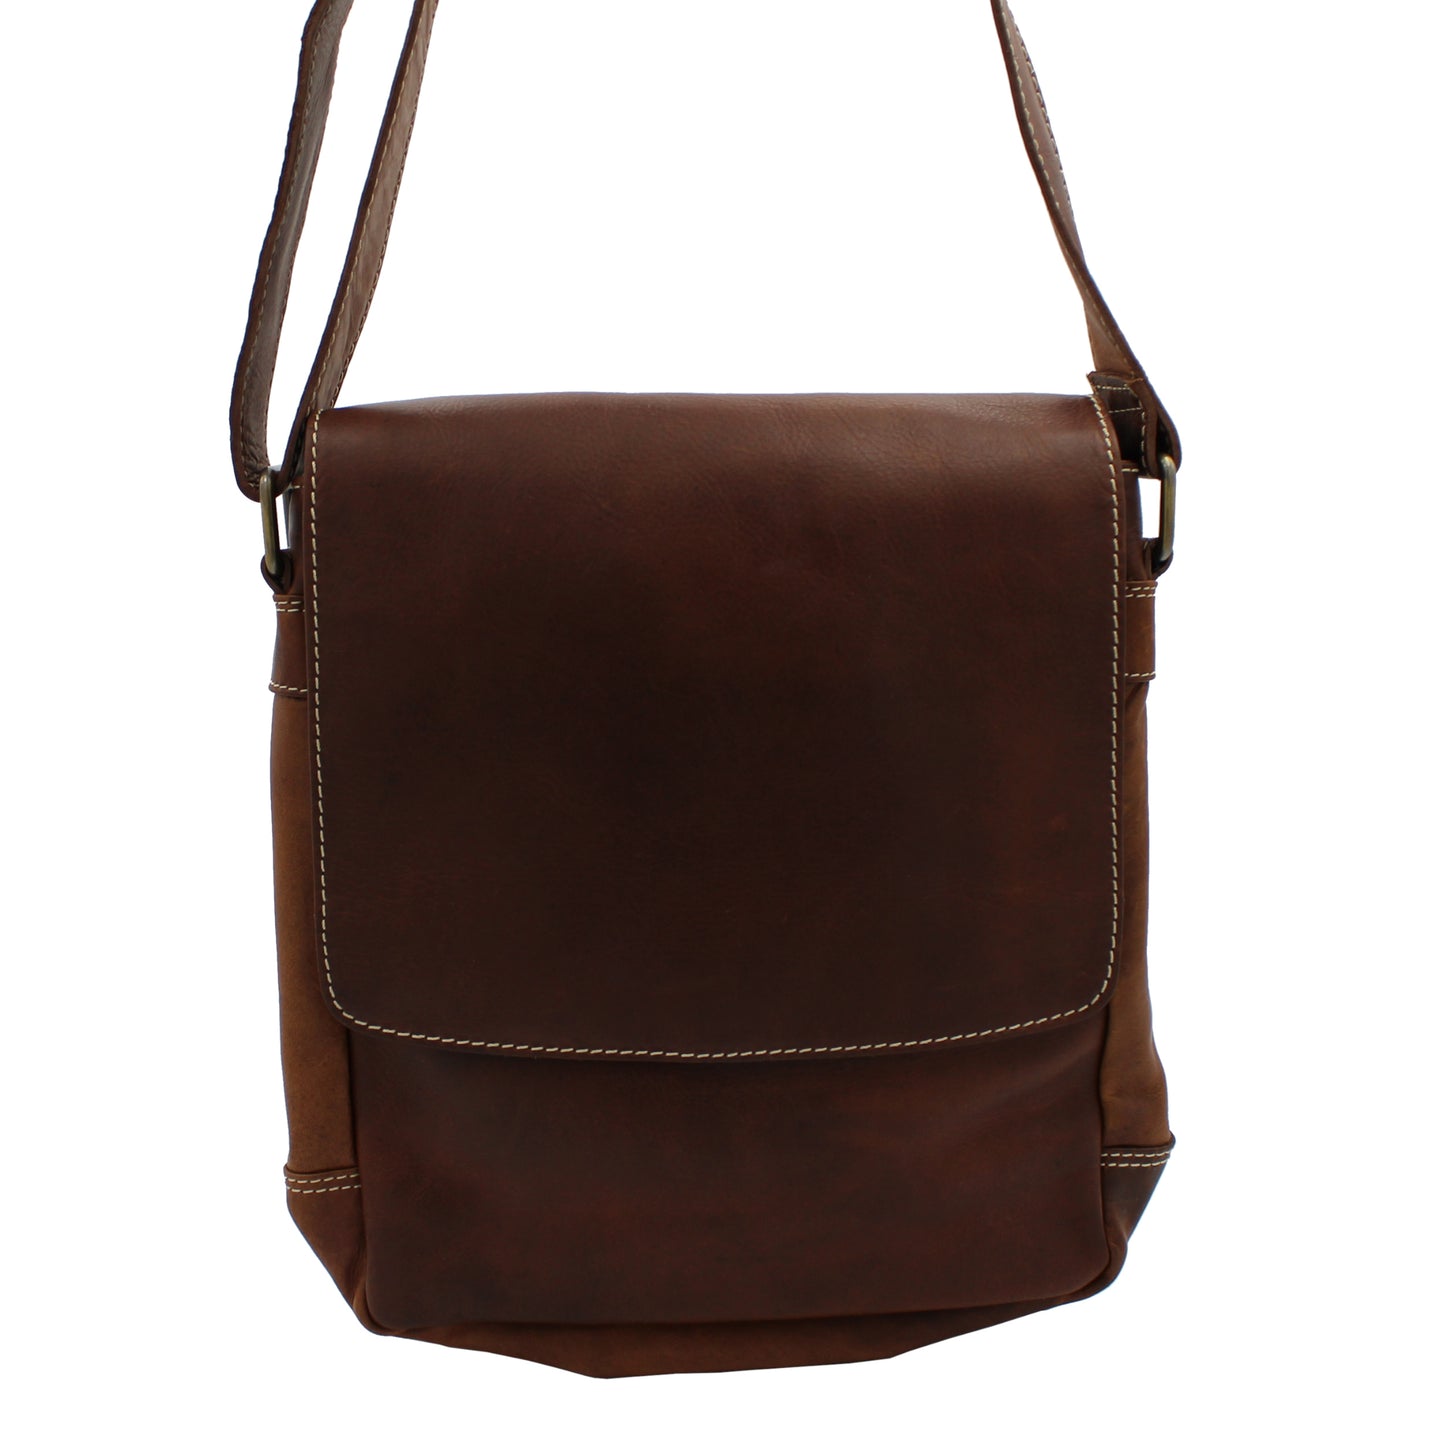 RE Leather Handbag (10"x12"x3.5")